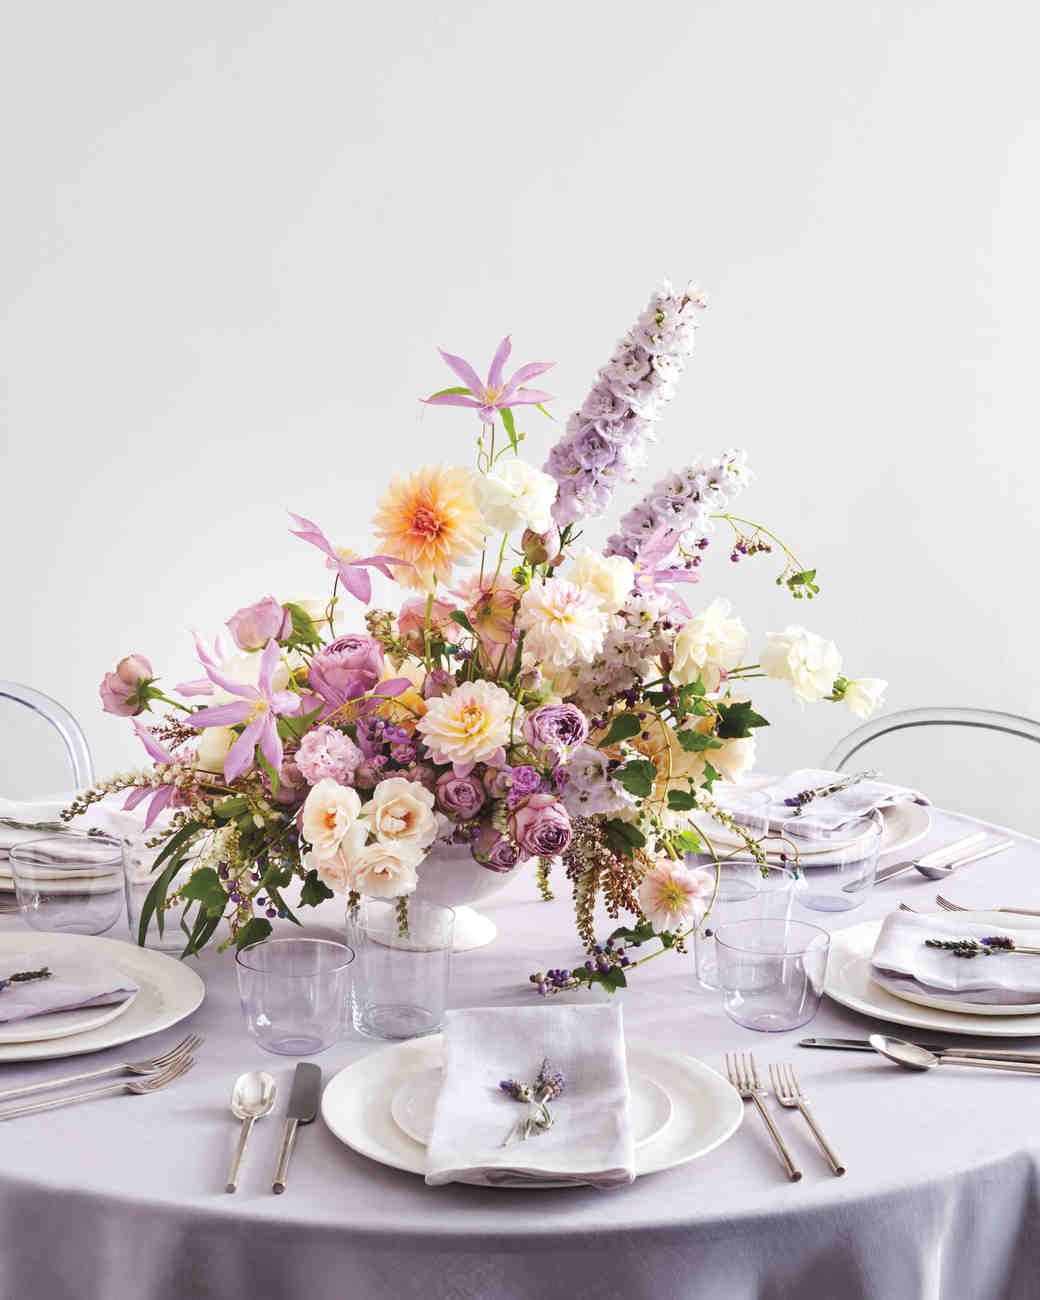 DIY Wedding Flower Arrangements
 23 DIY Wedding Centerpieces We Love